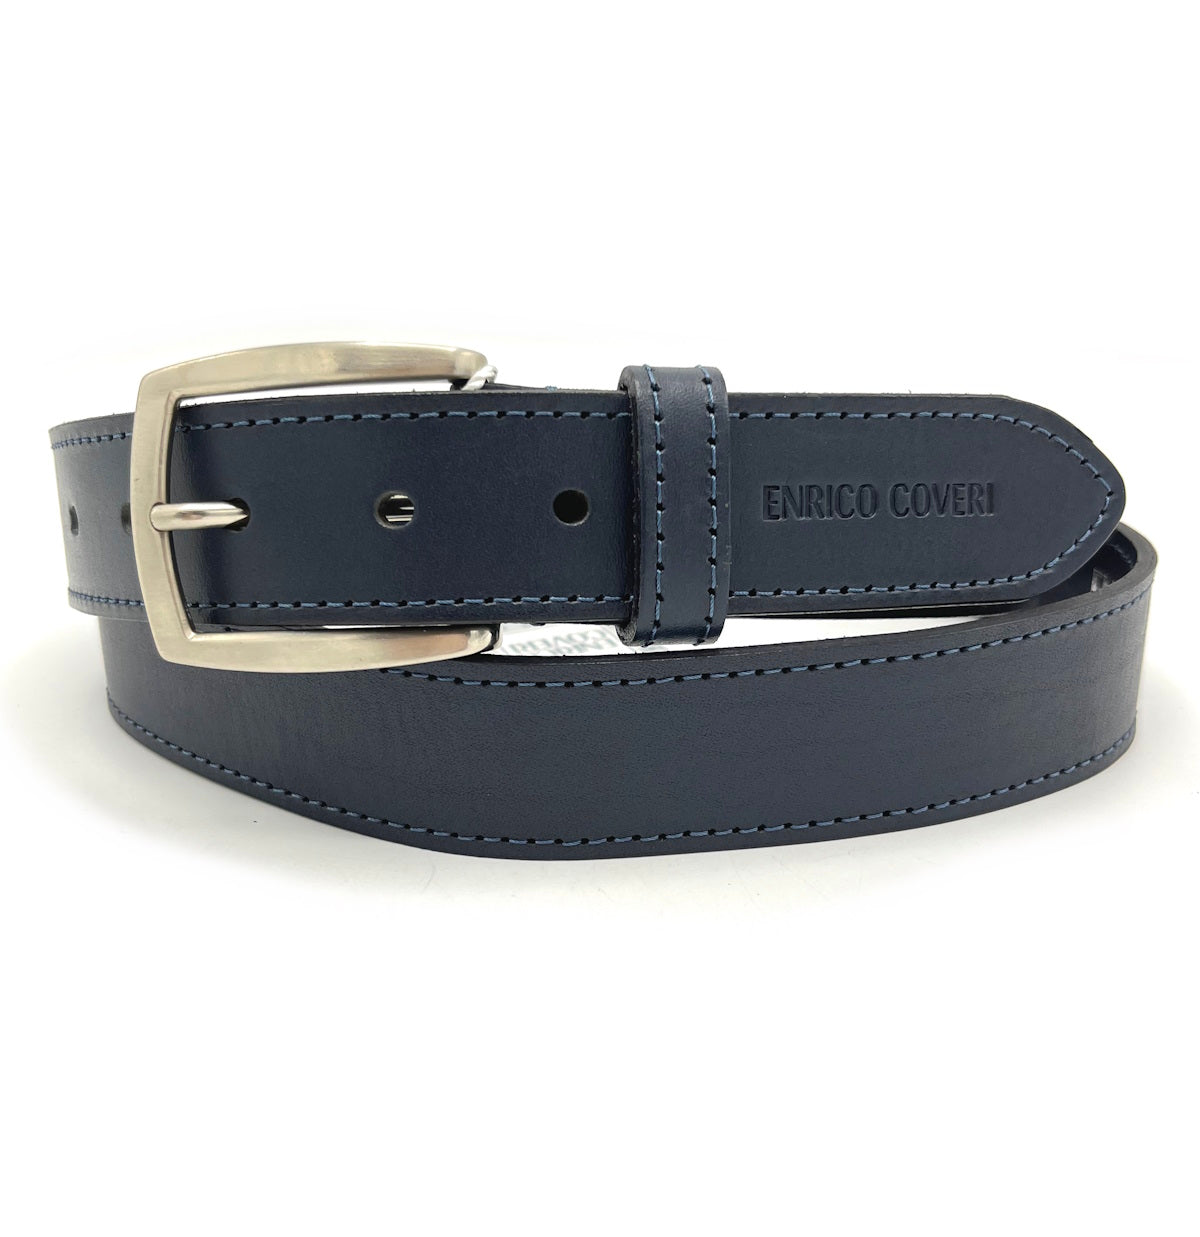 Genuine leather belt, Handmade in Italy, Brand Enrico Coveri, art. EC3515